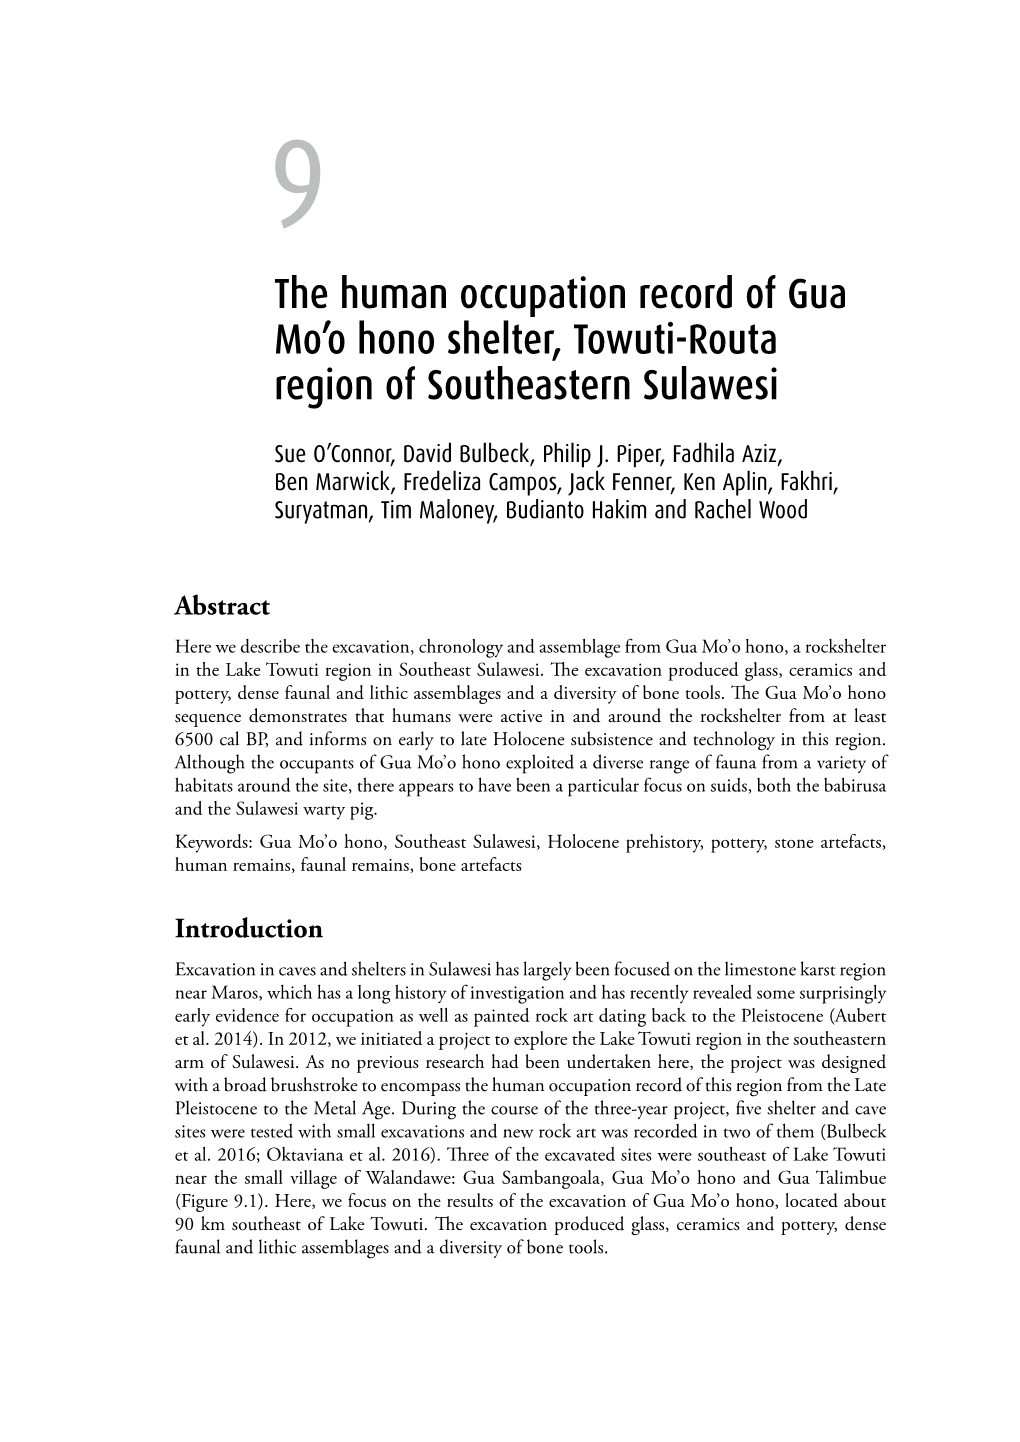 9. the Human Occupation Record of Gua Mo'o Hono Shelter, Towuti